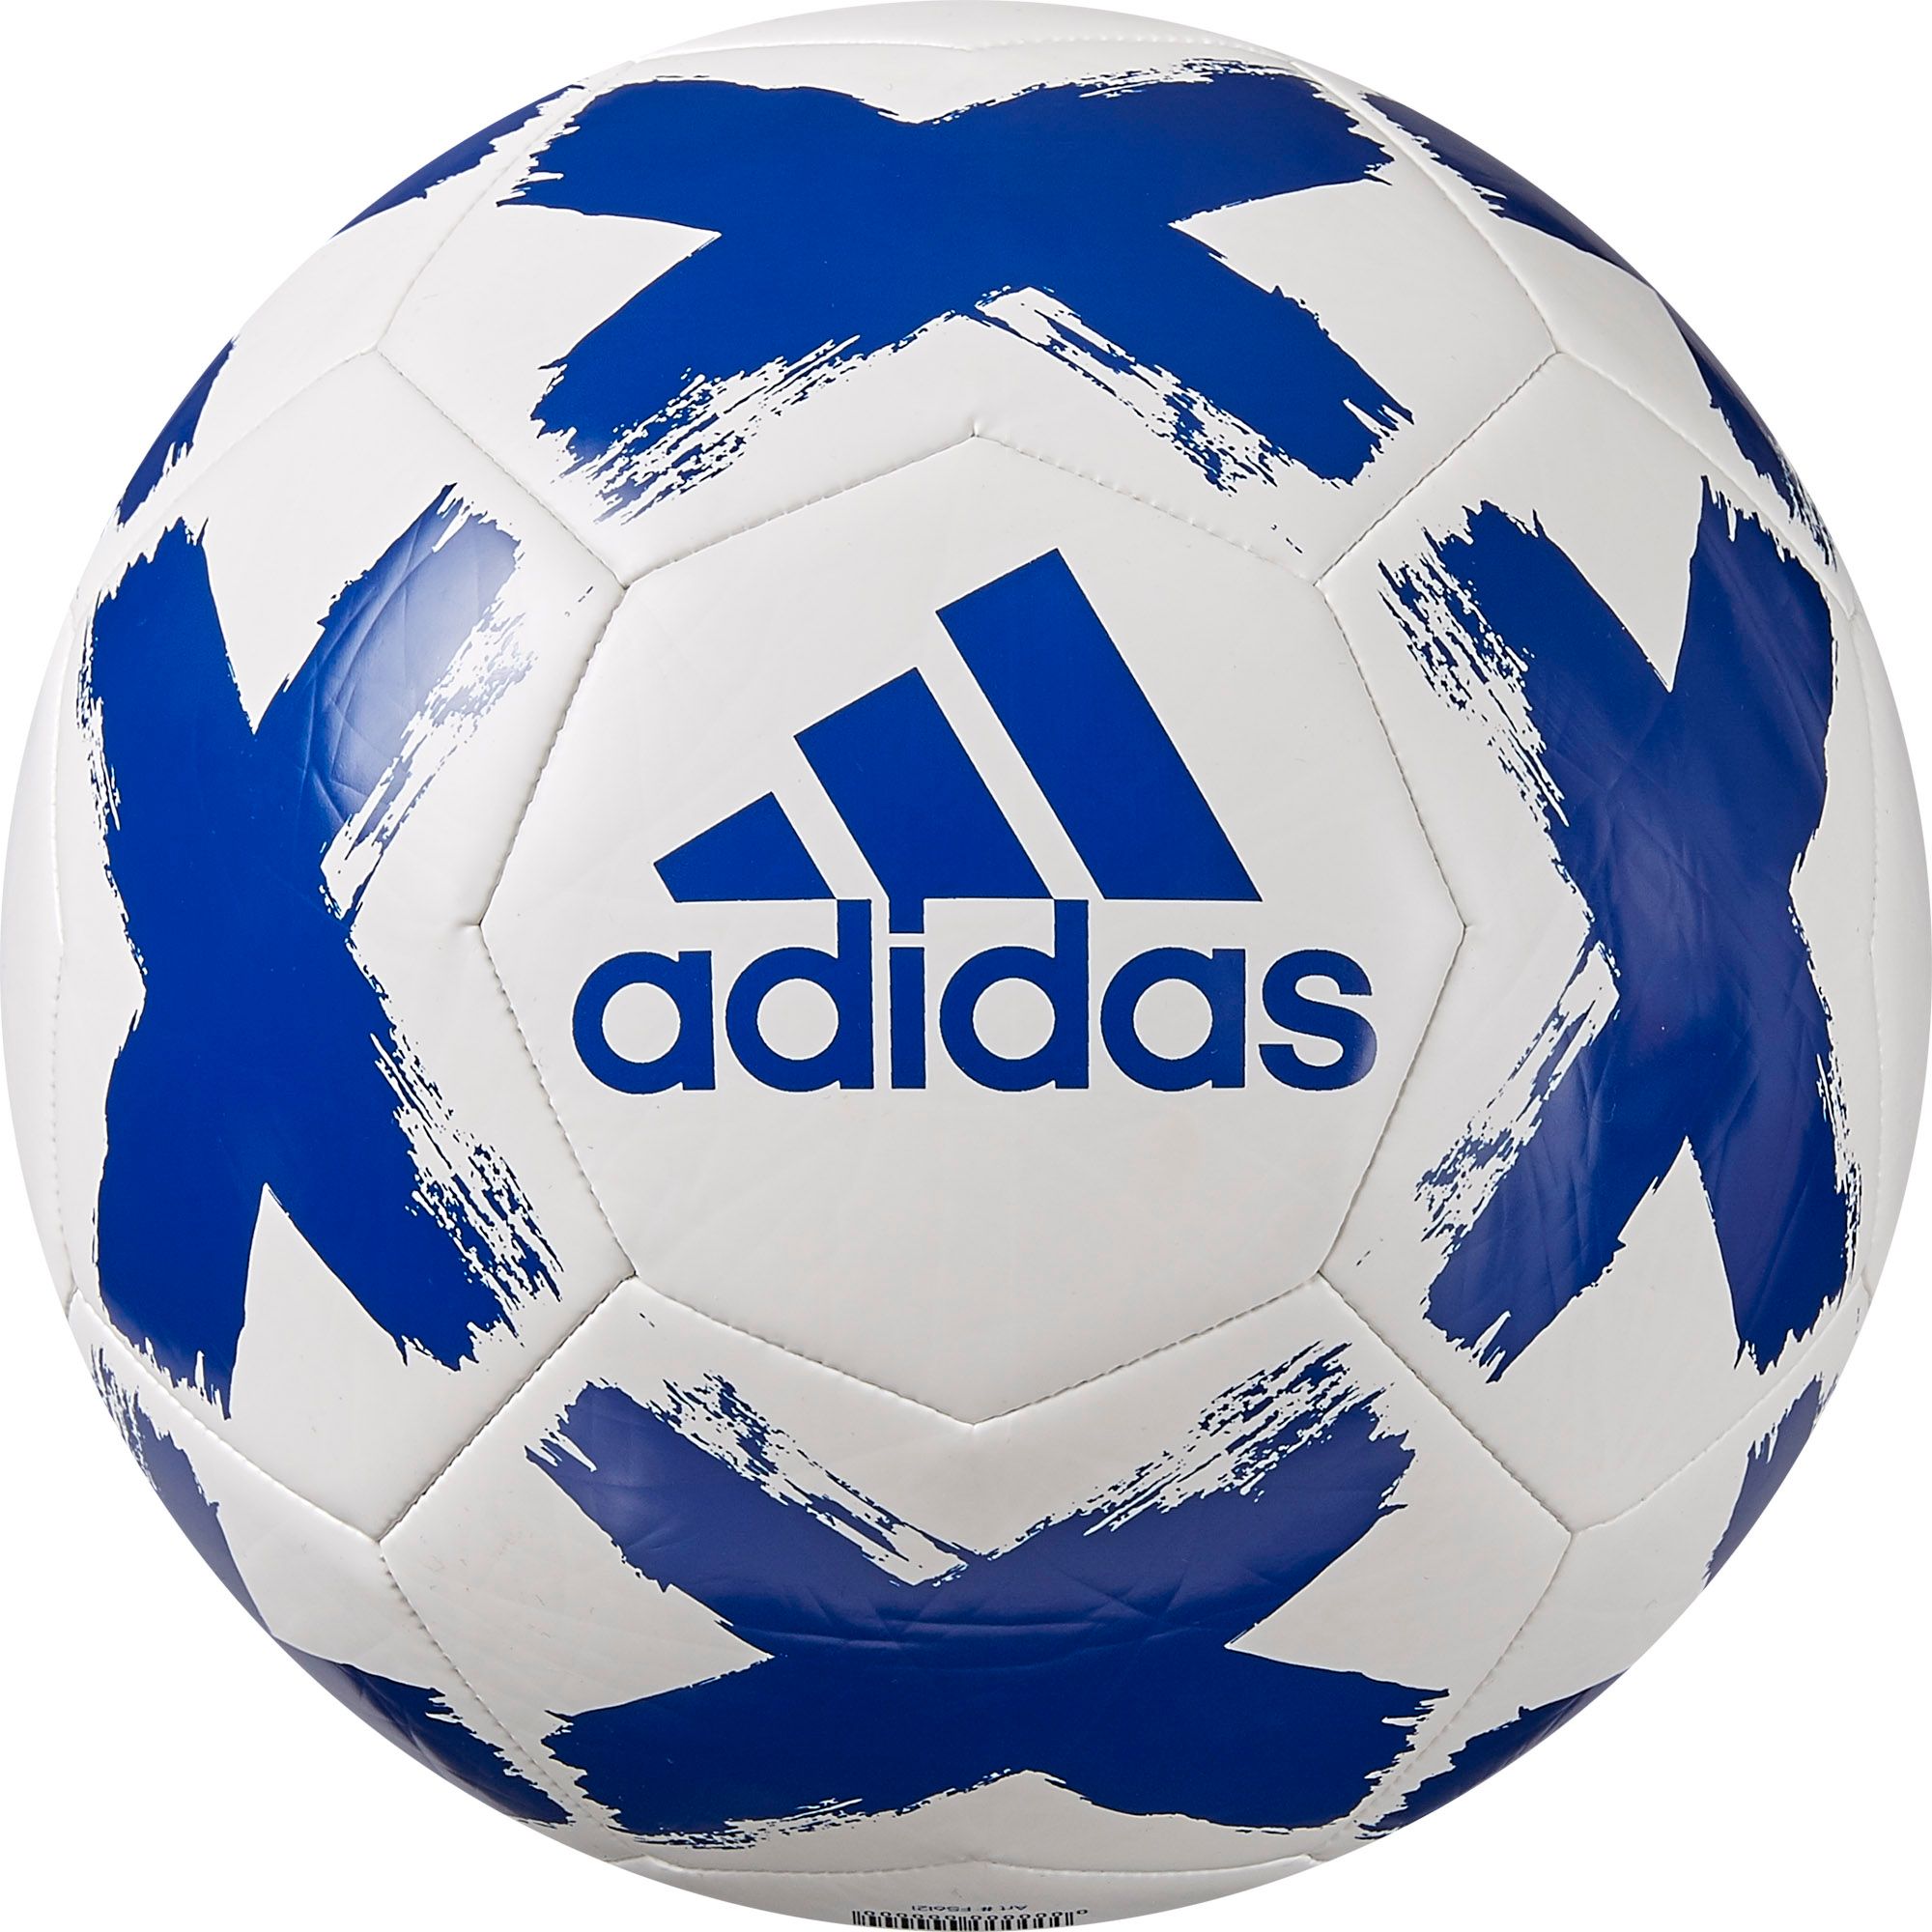 adidas youth soccer starter kit